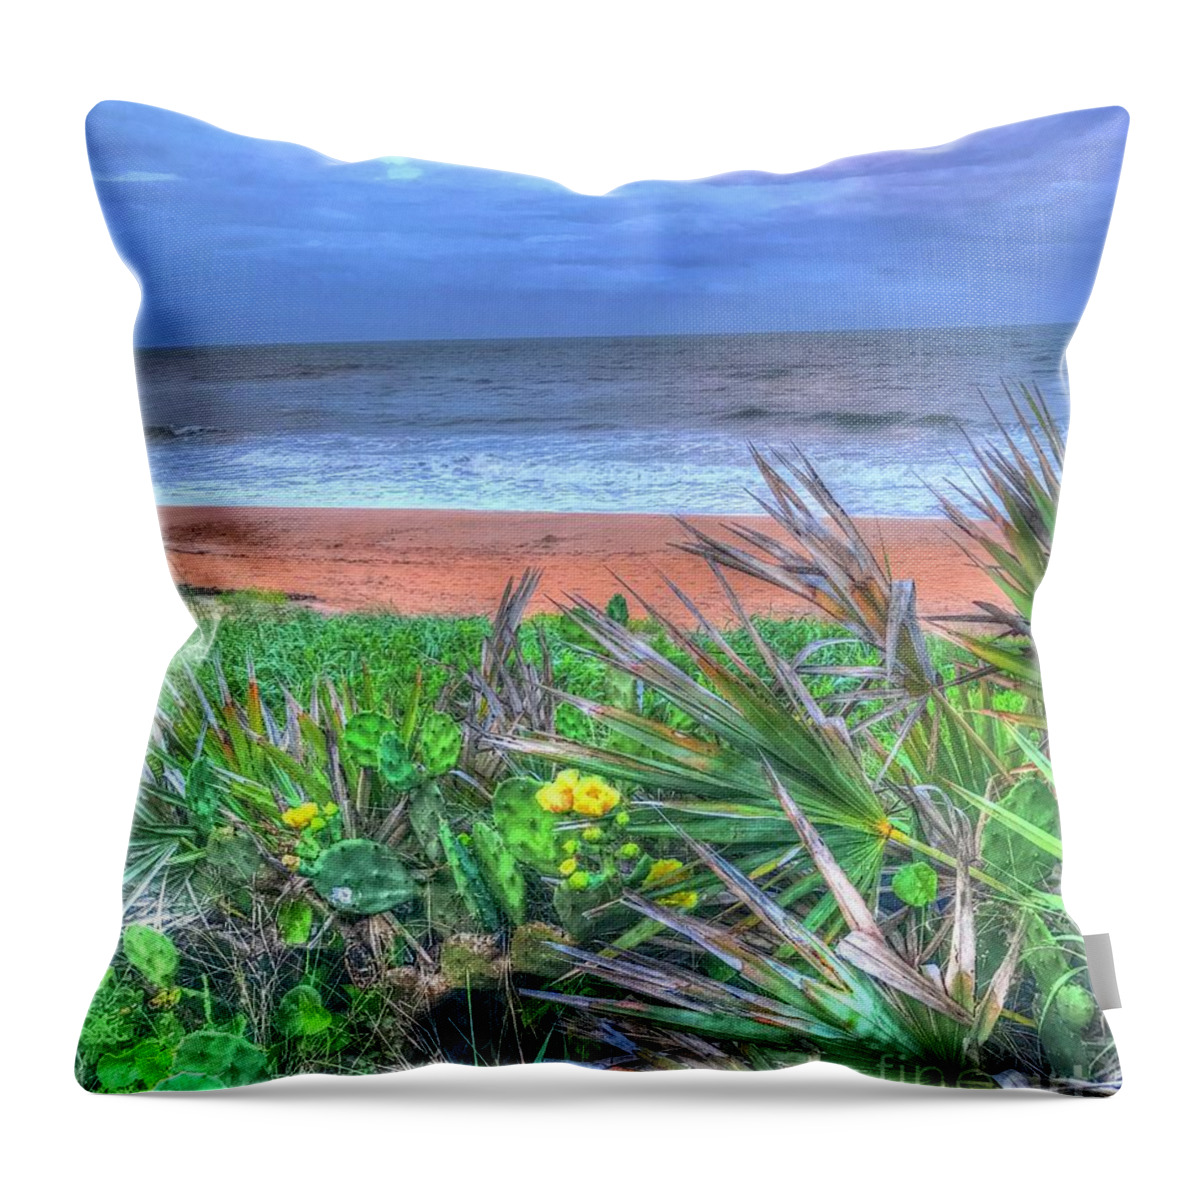 Cactus Throw Pillow featuring the photograph Beach Cactus by Debbi Granruth